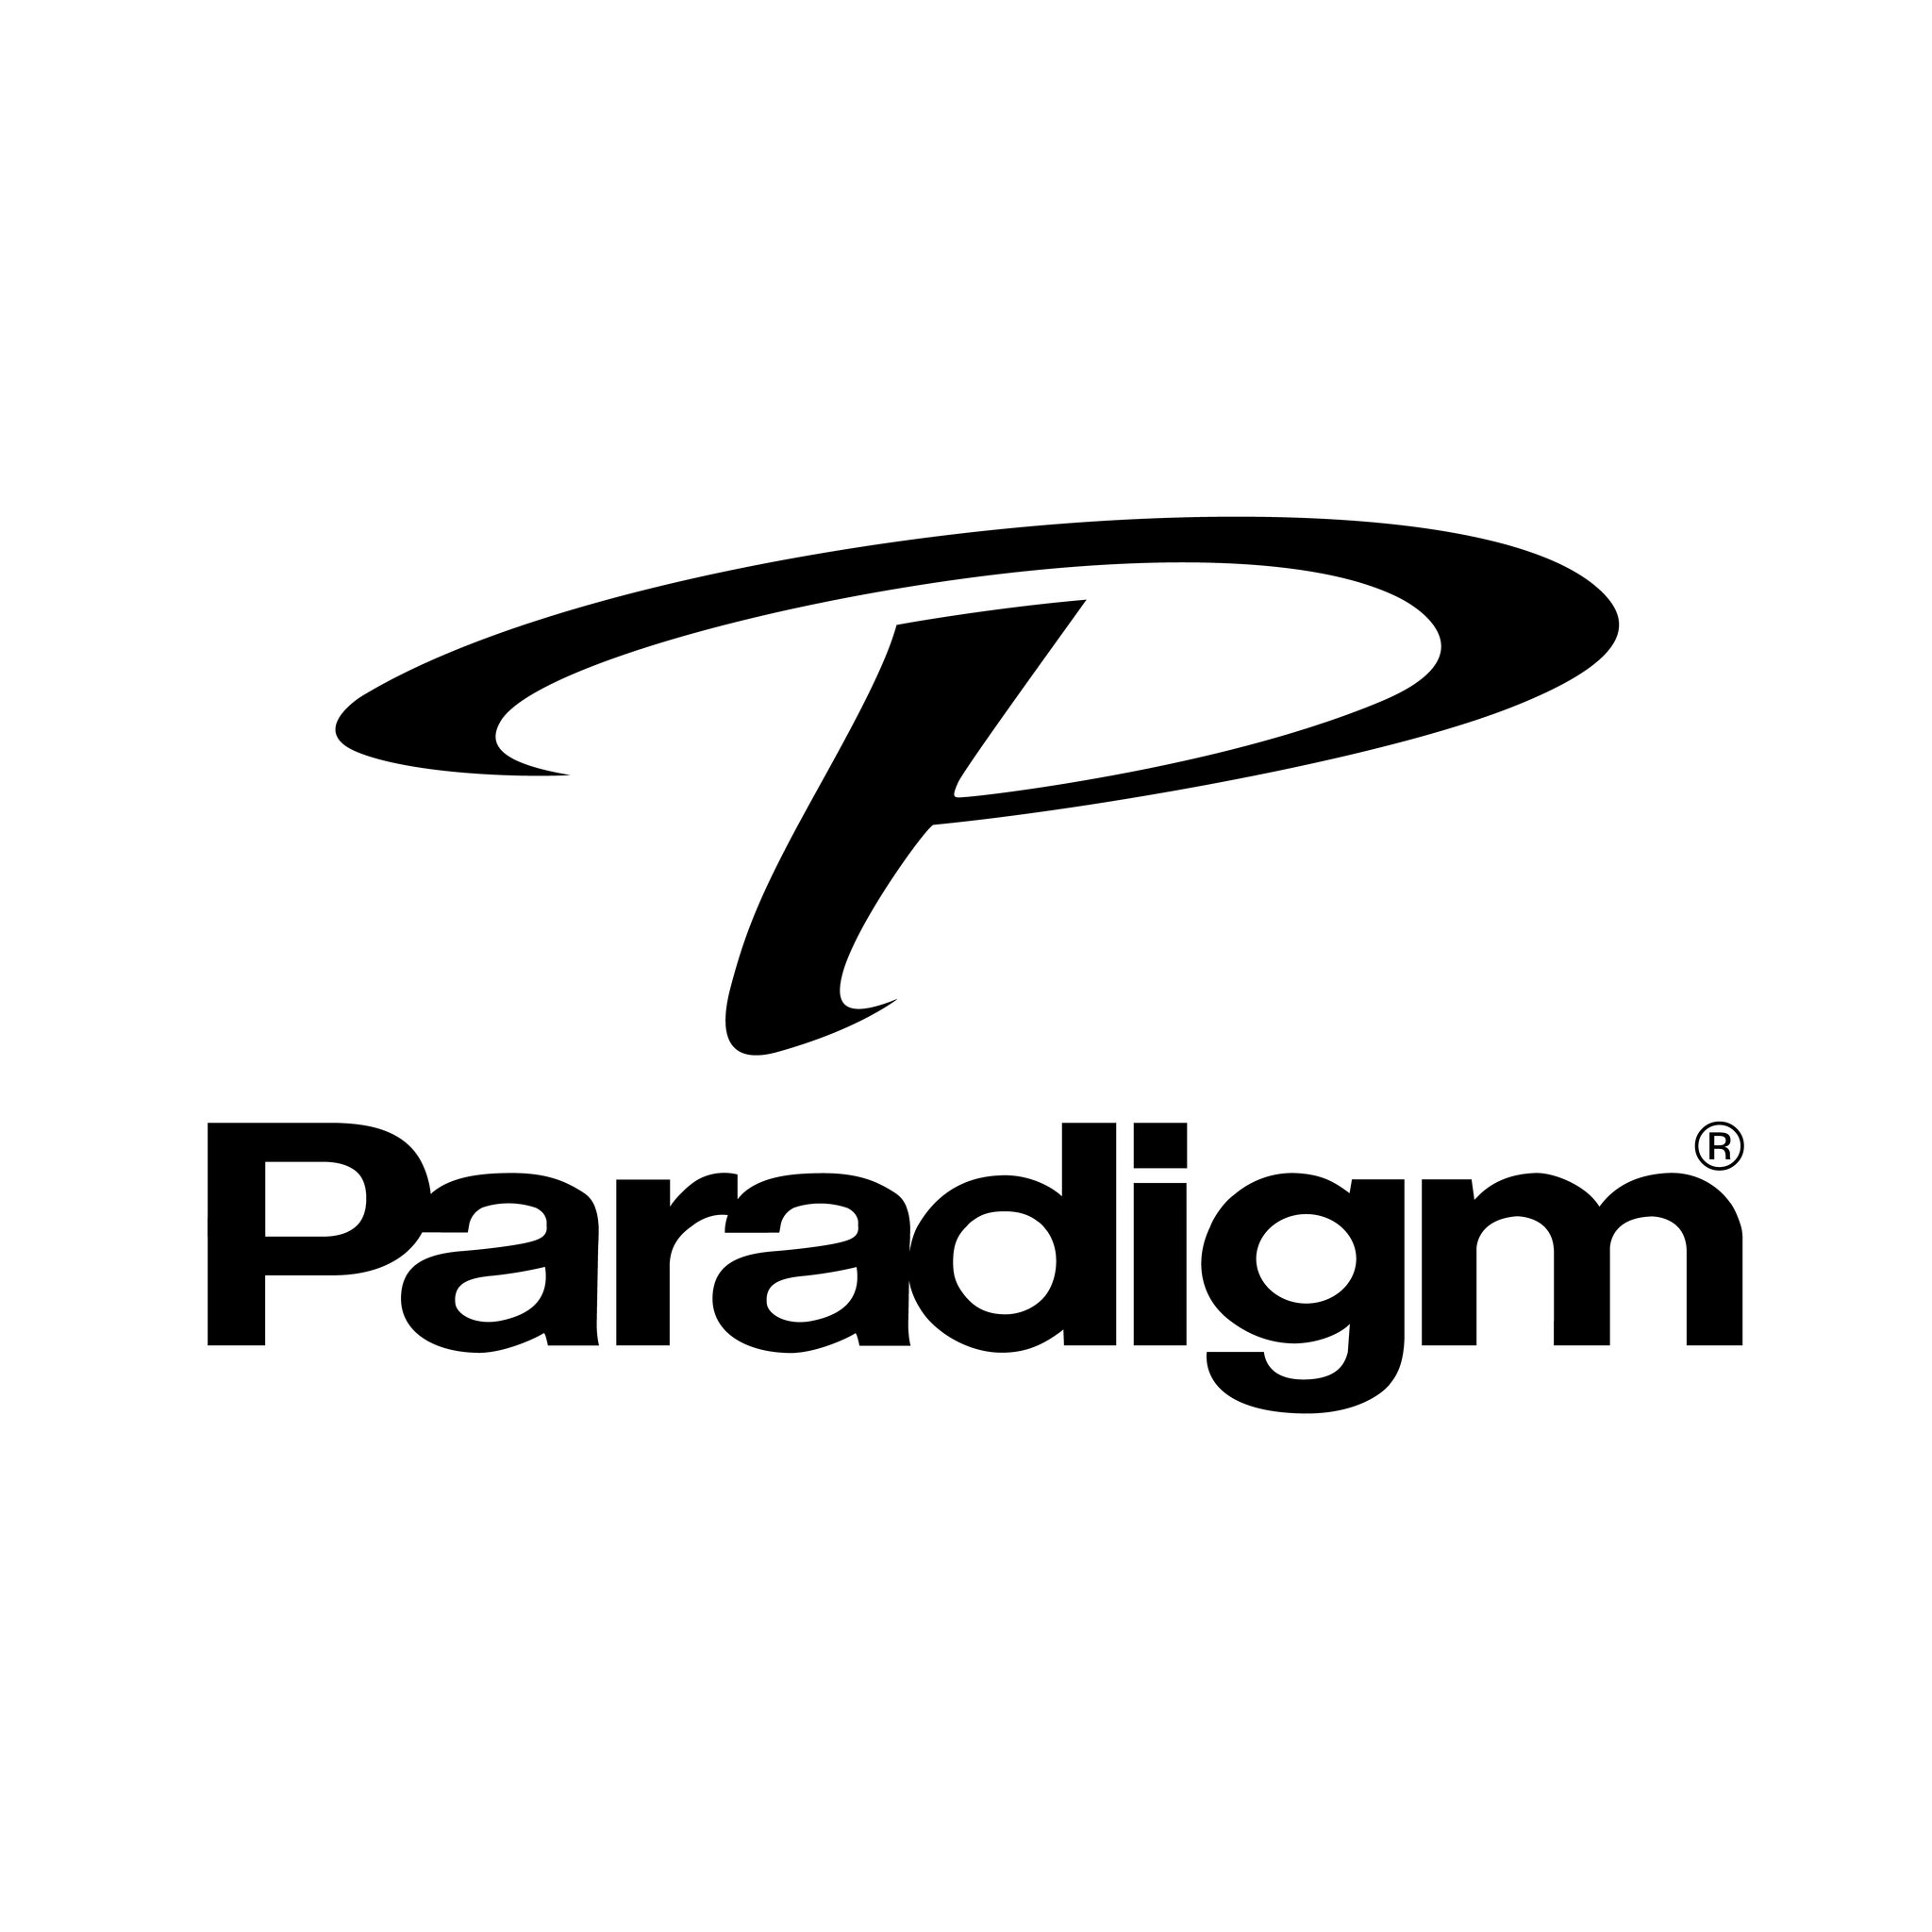 Paradigm.jpg